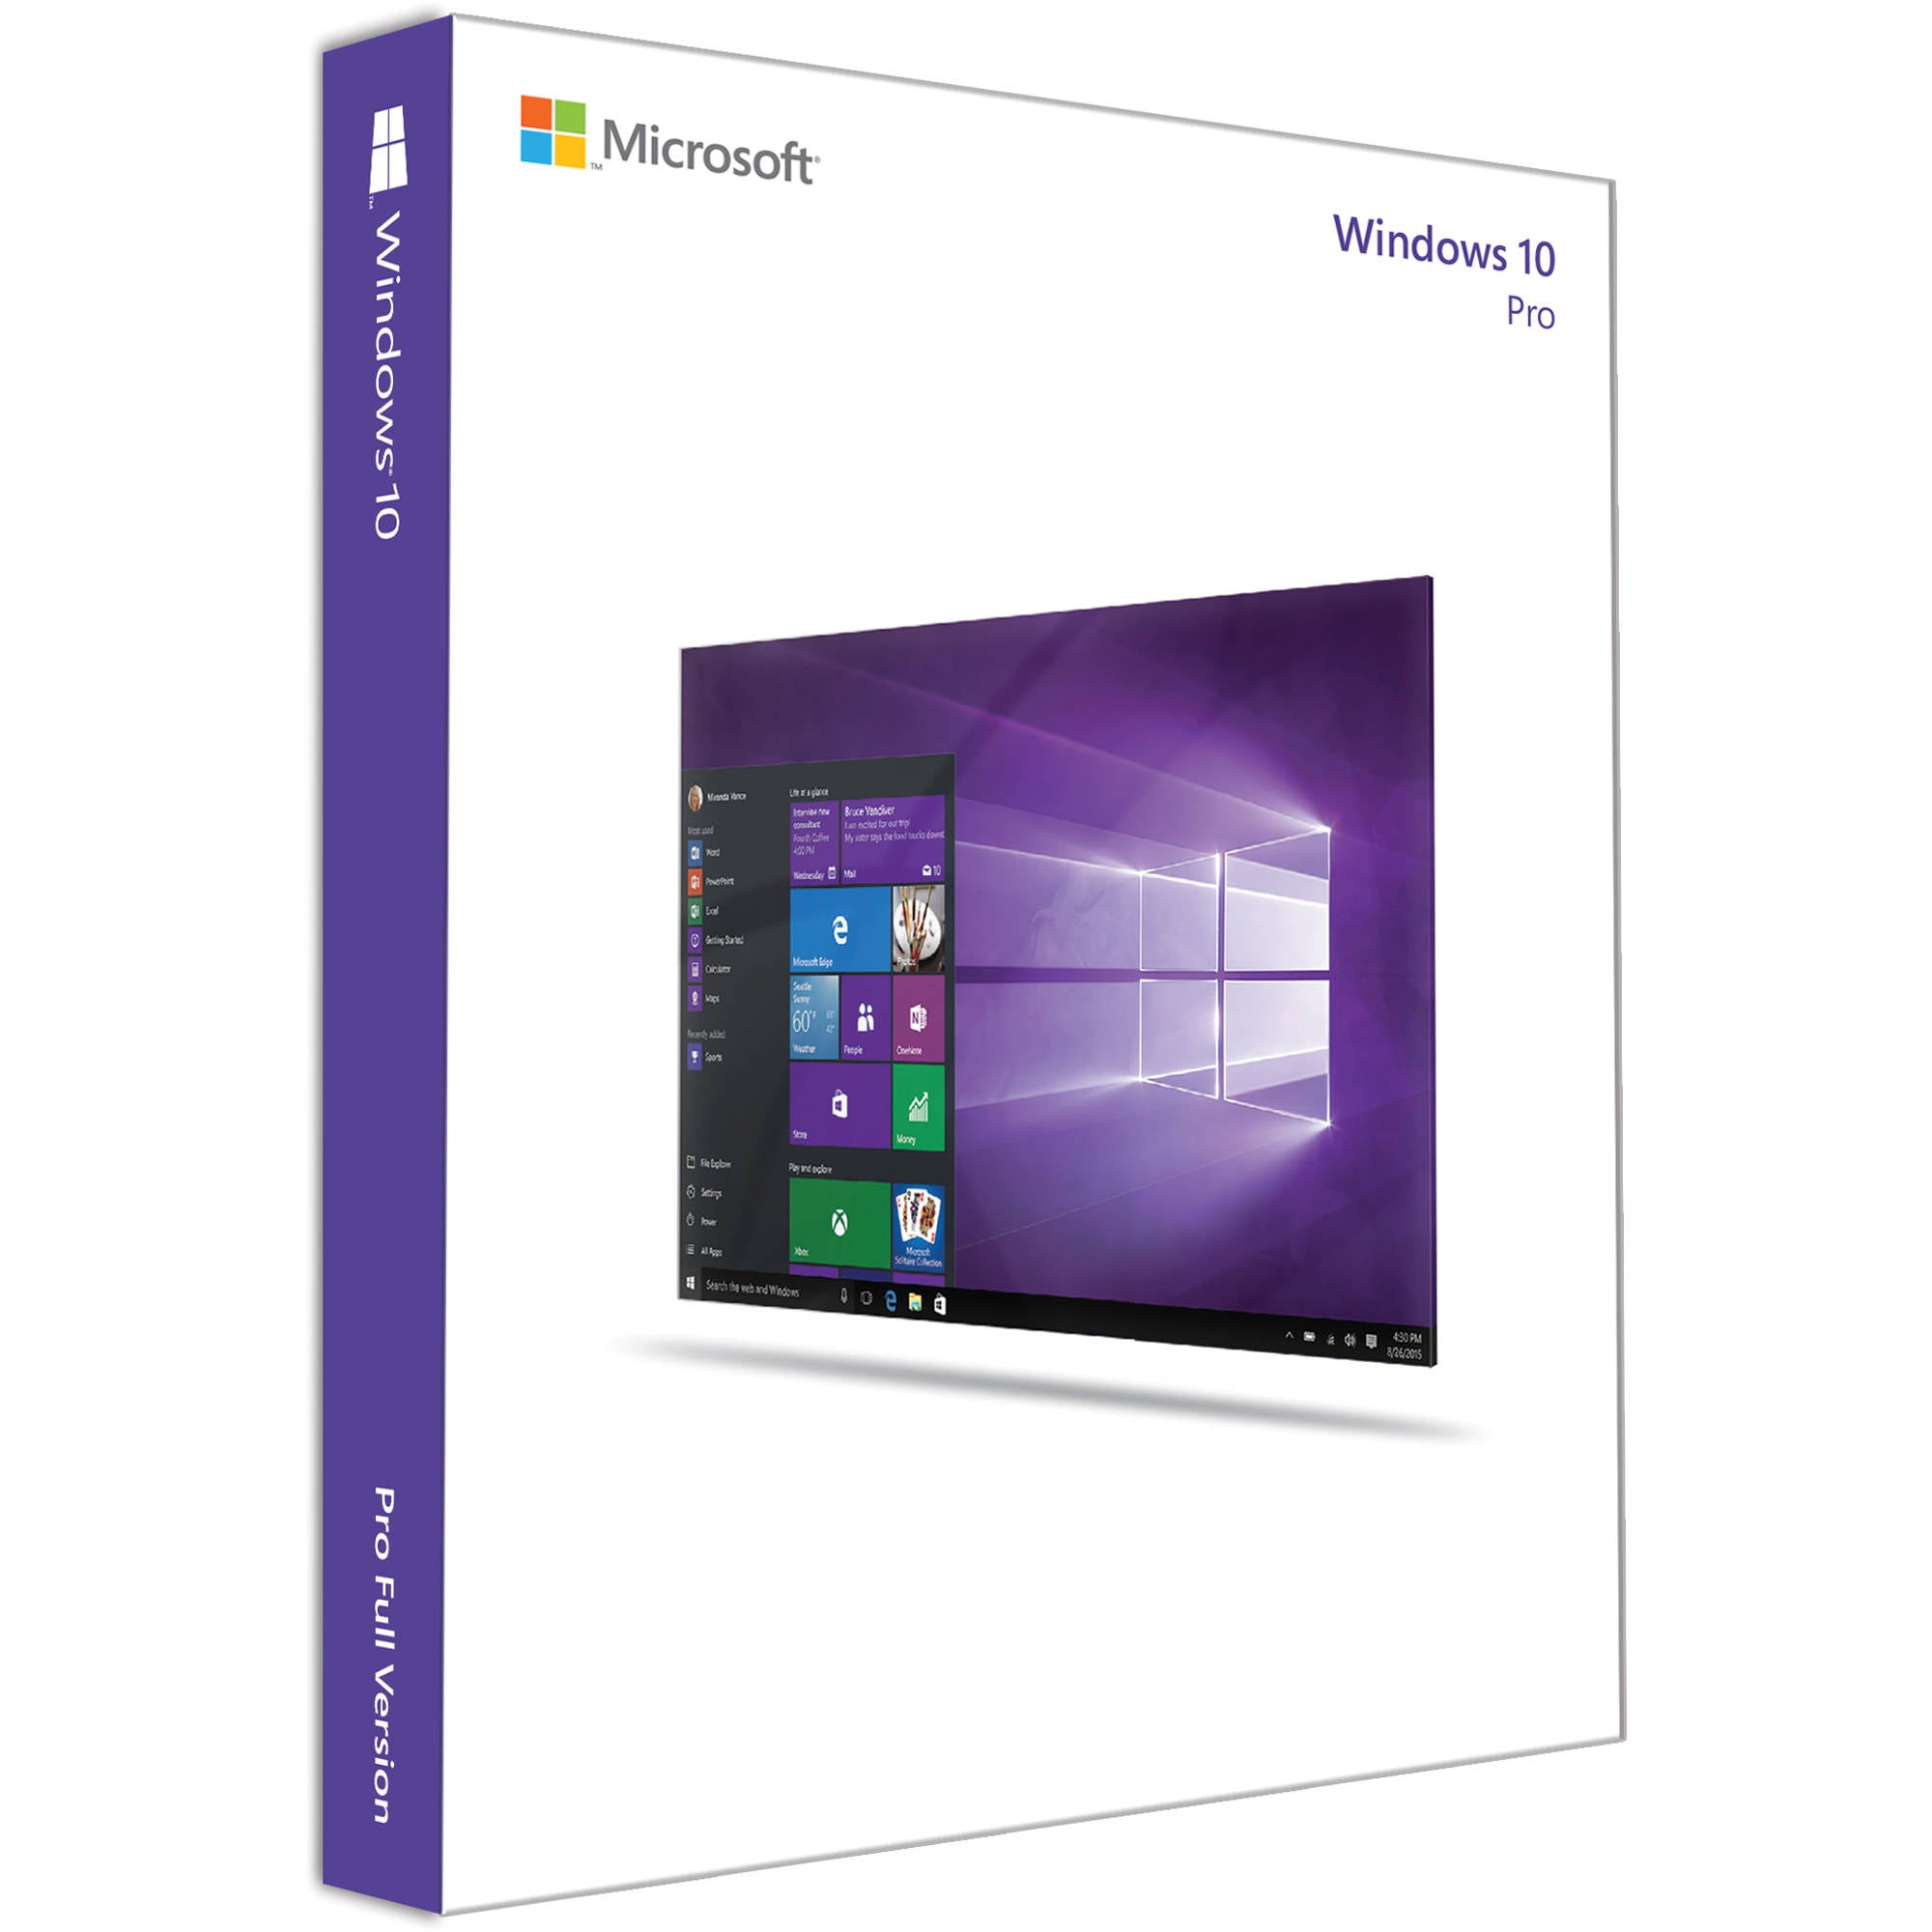 Microsoft Windows 10 Pro Professional For 32 or 64 Bit